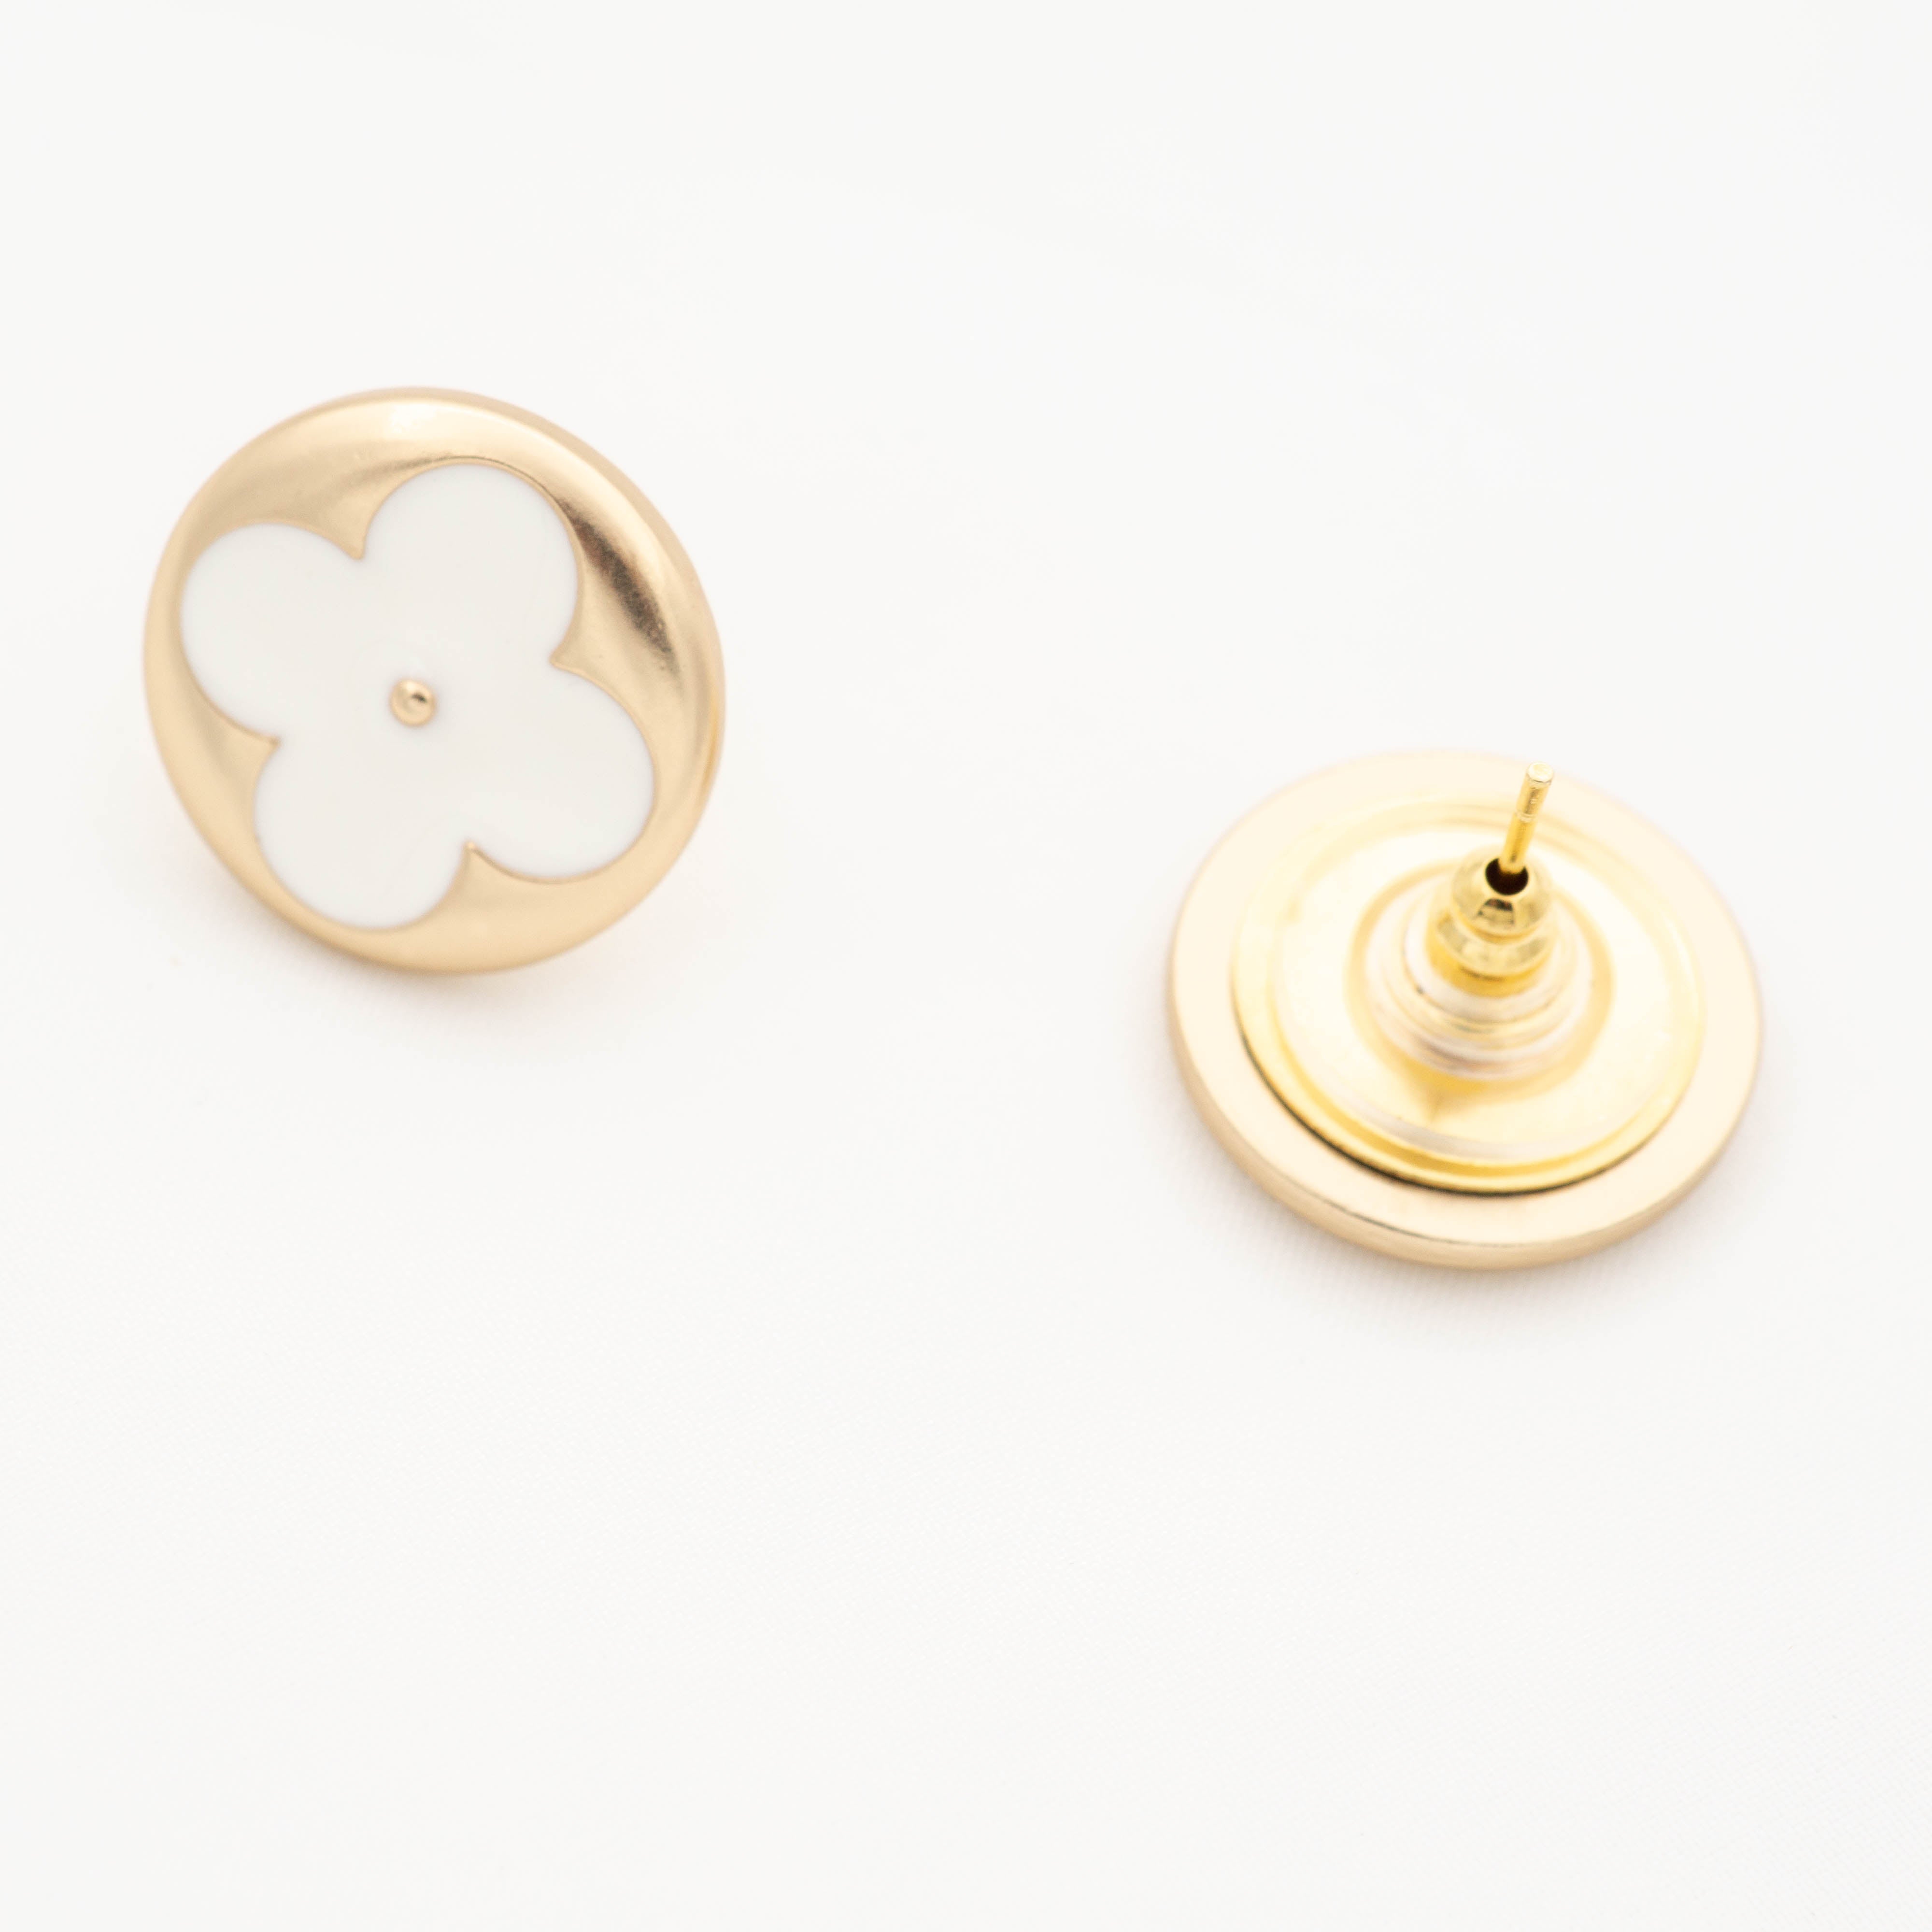 Repurposed LO Button Earrings – The DJF